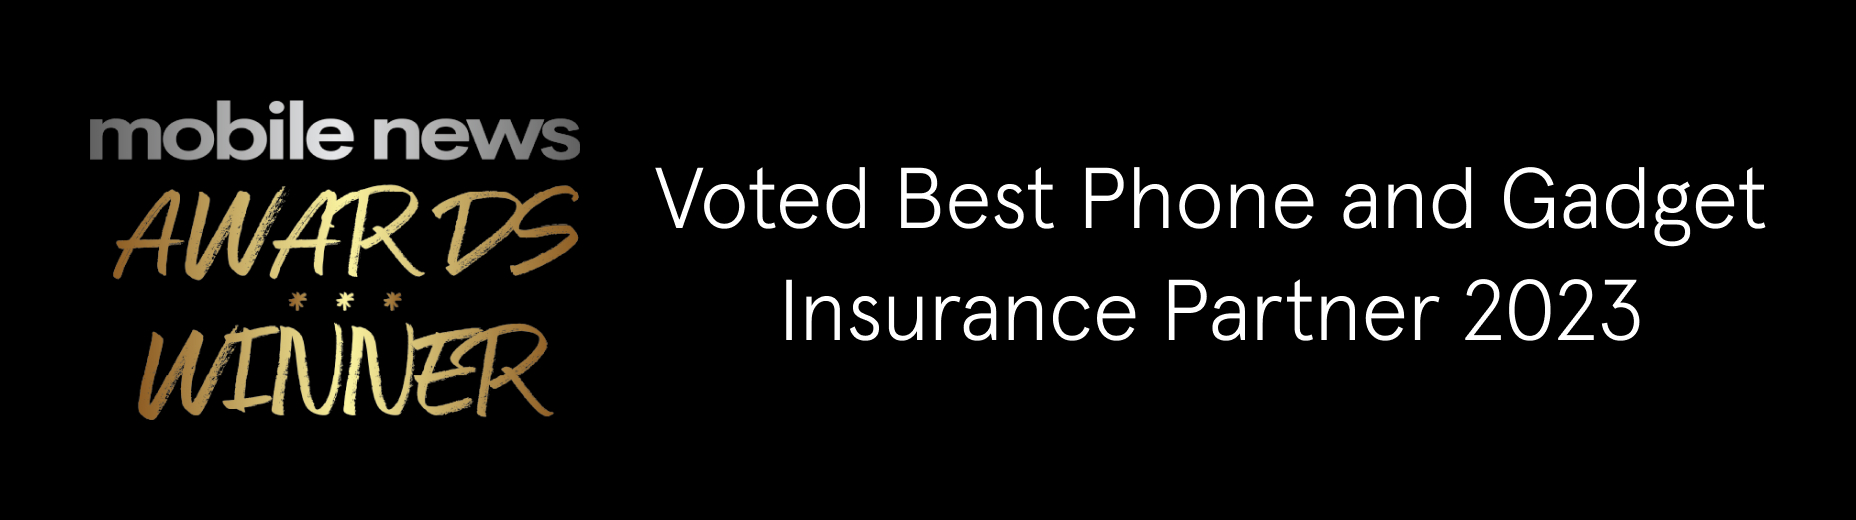 mobile news awards winner. Voted Best Phone and Gadget Insurance Partner 2023.